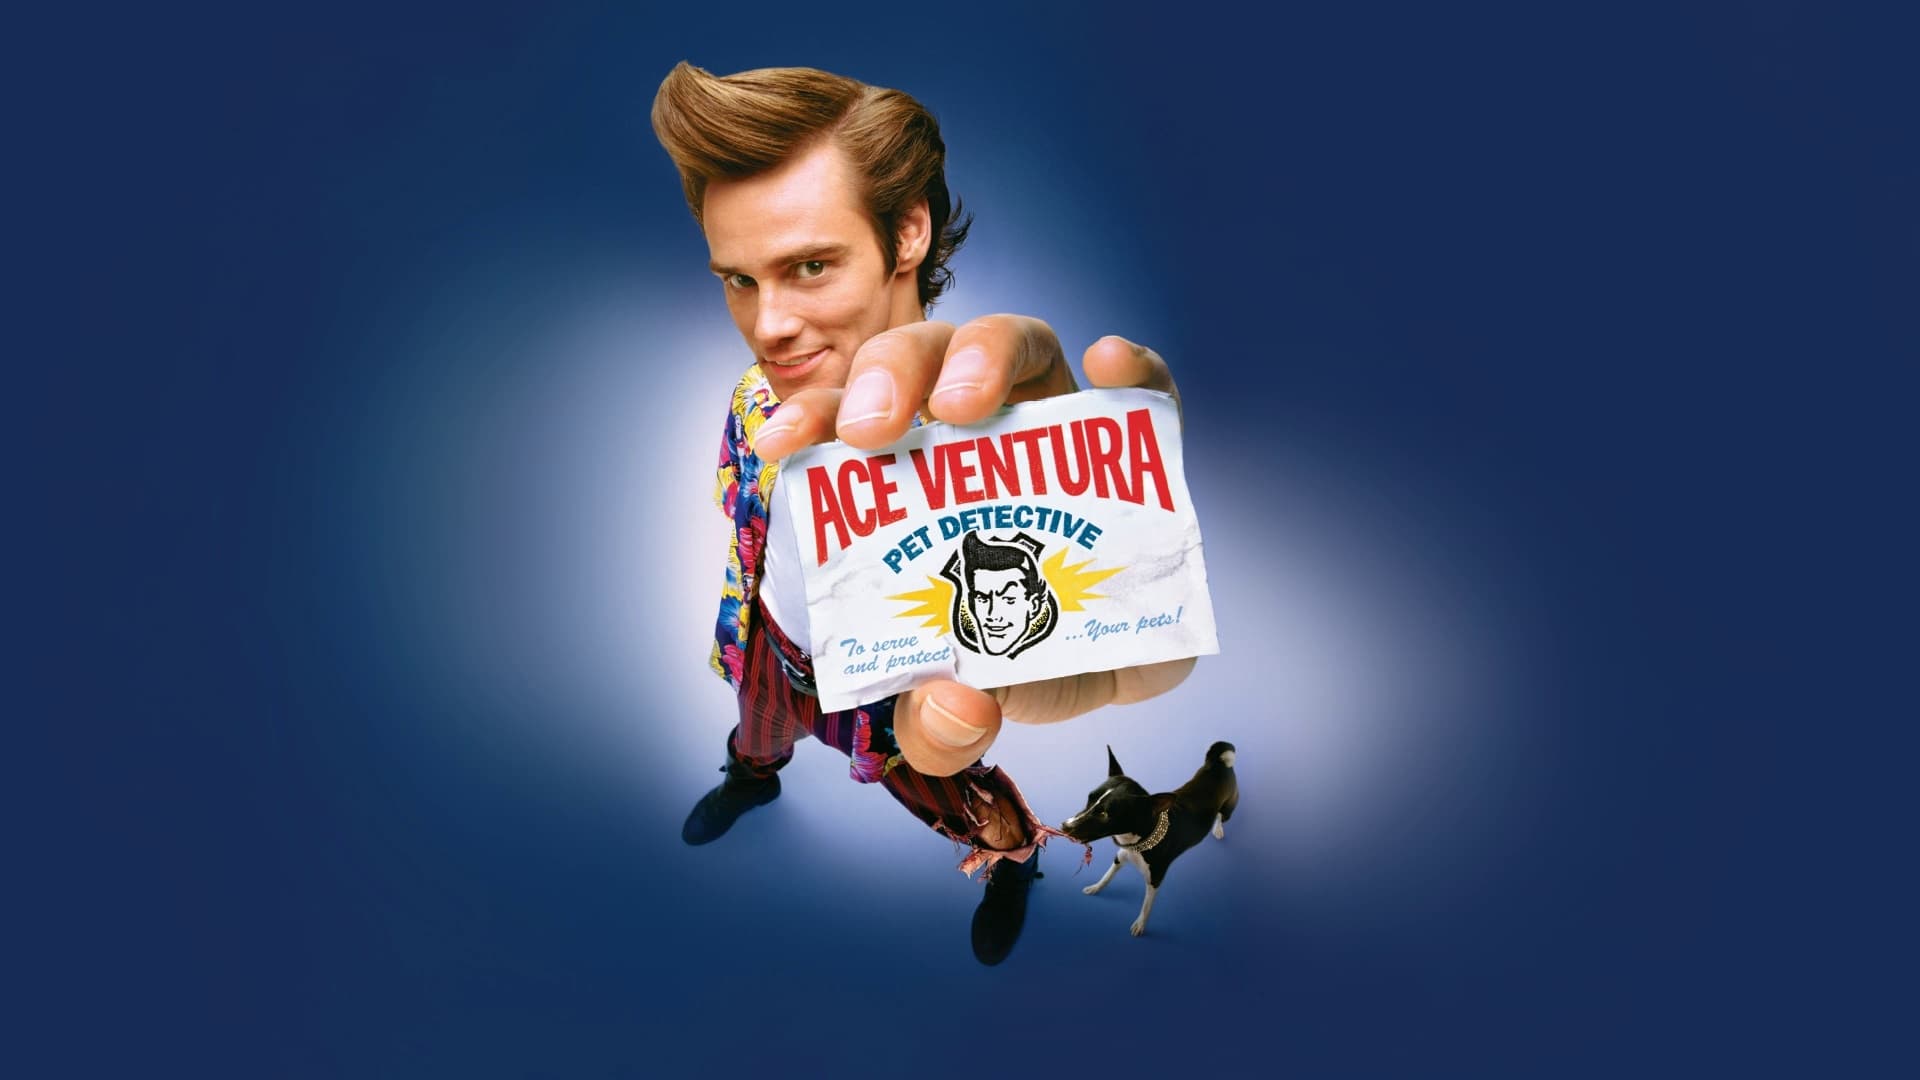 Ace Ventura - Detective Animal